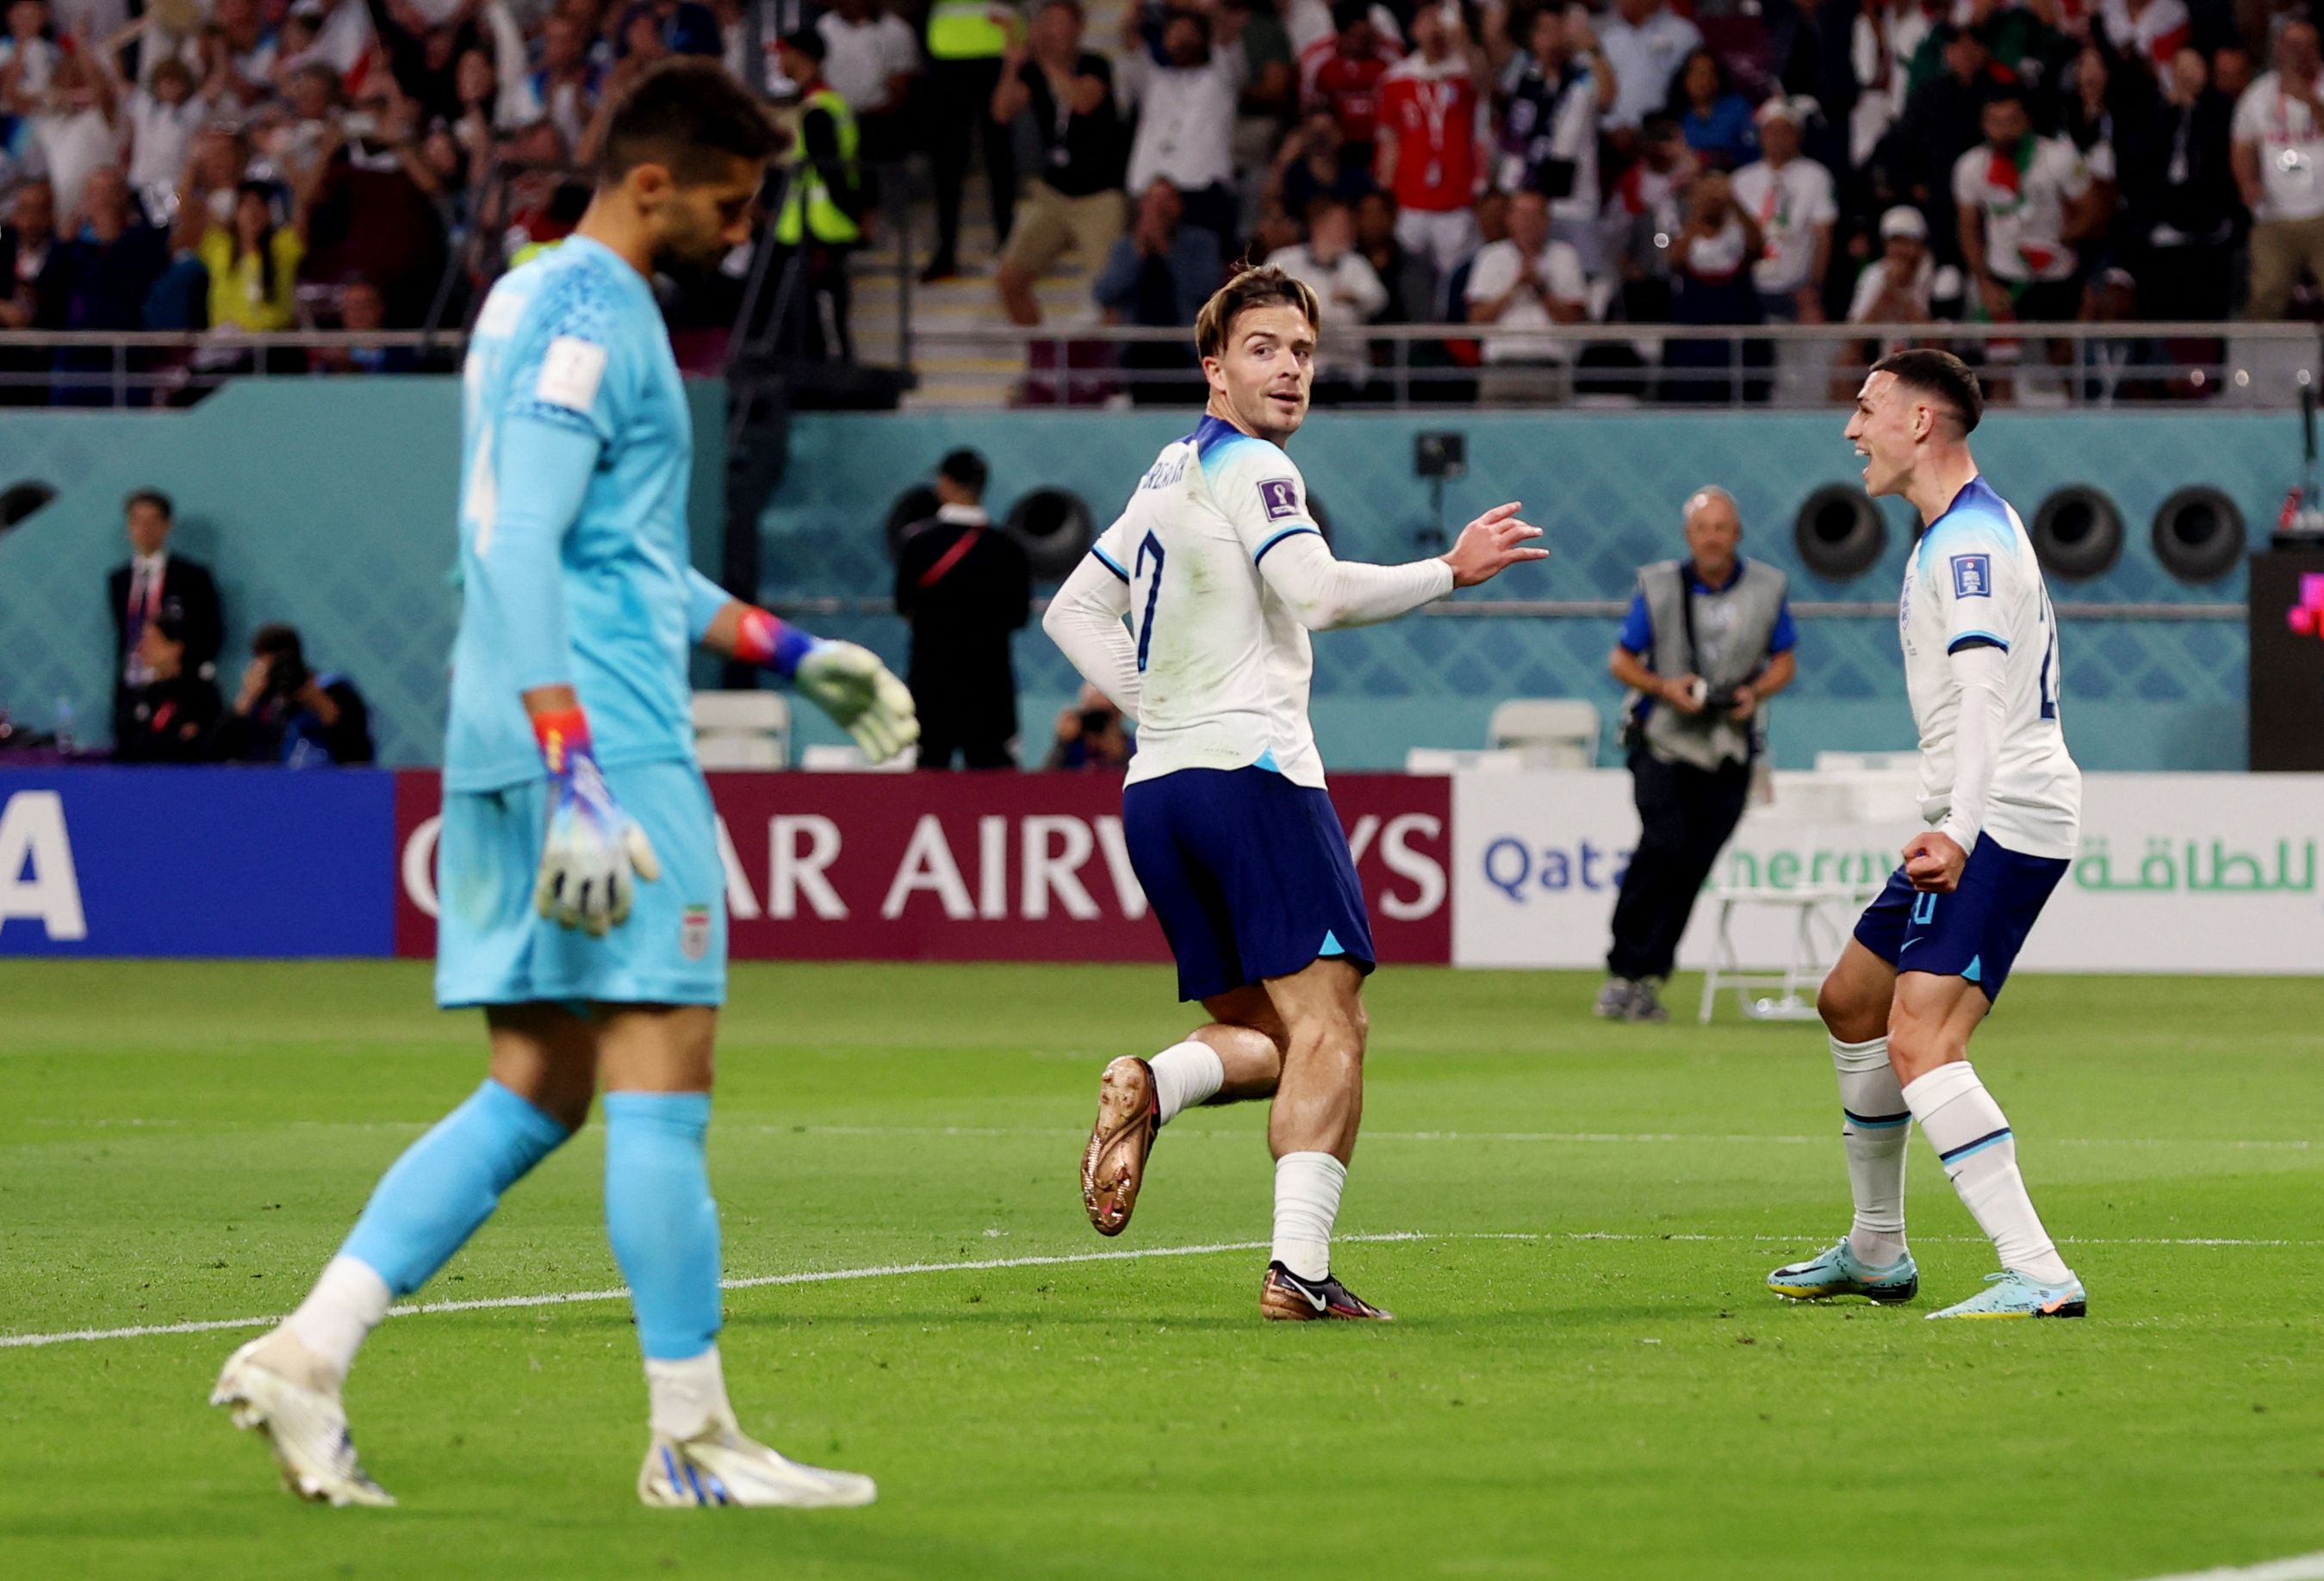 England's Grealish peels away after scoring vs Iran.